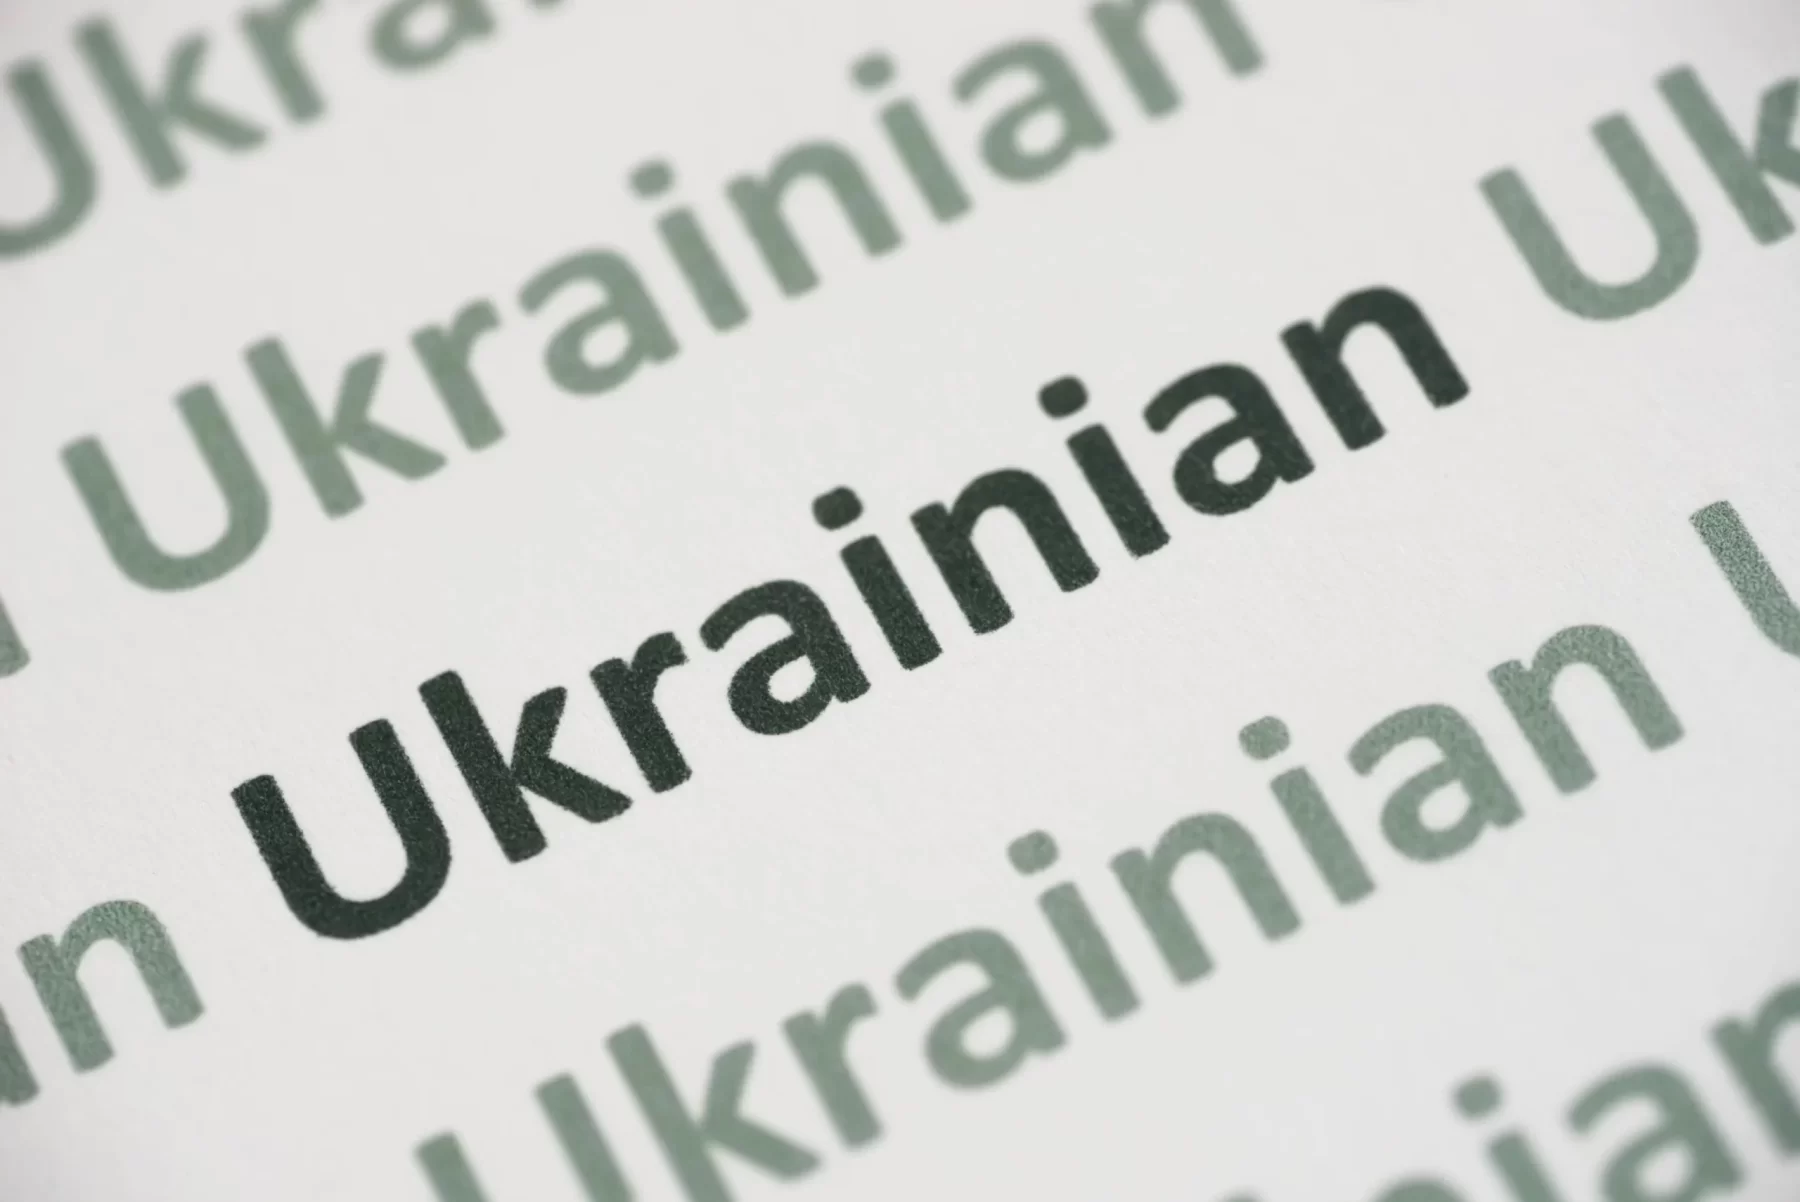 Langbay - English-to-Polish Translation for Market Impact - The Growing Need for Ukrainian Translation